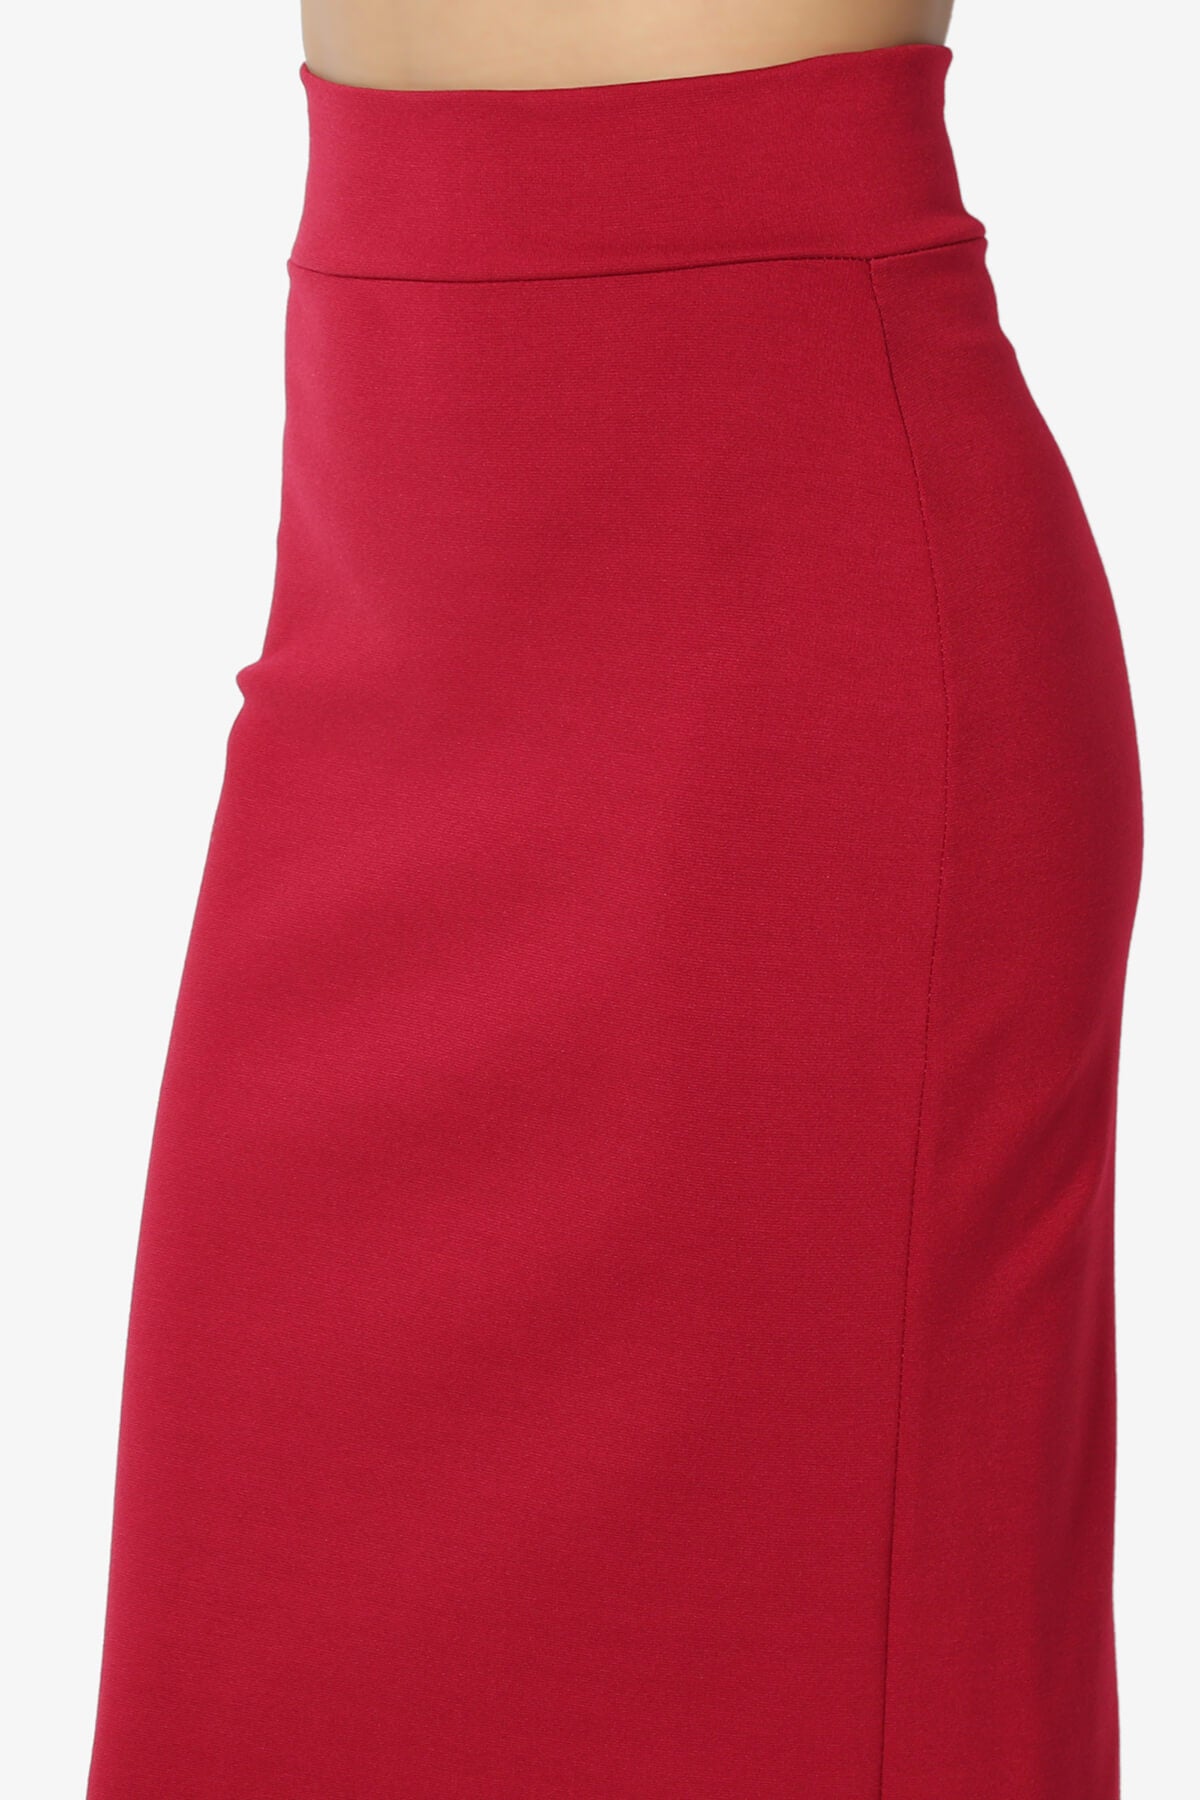 Carleta Mid Calf Pencil Skirt RED_5